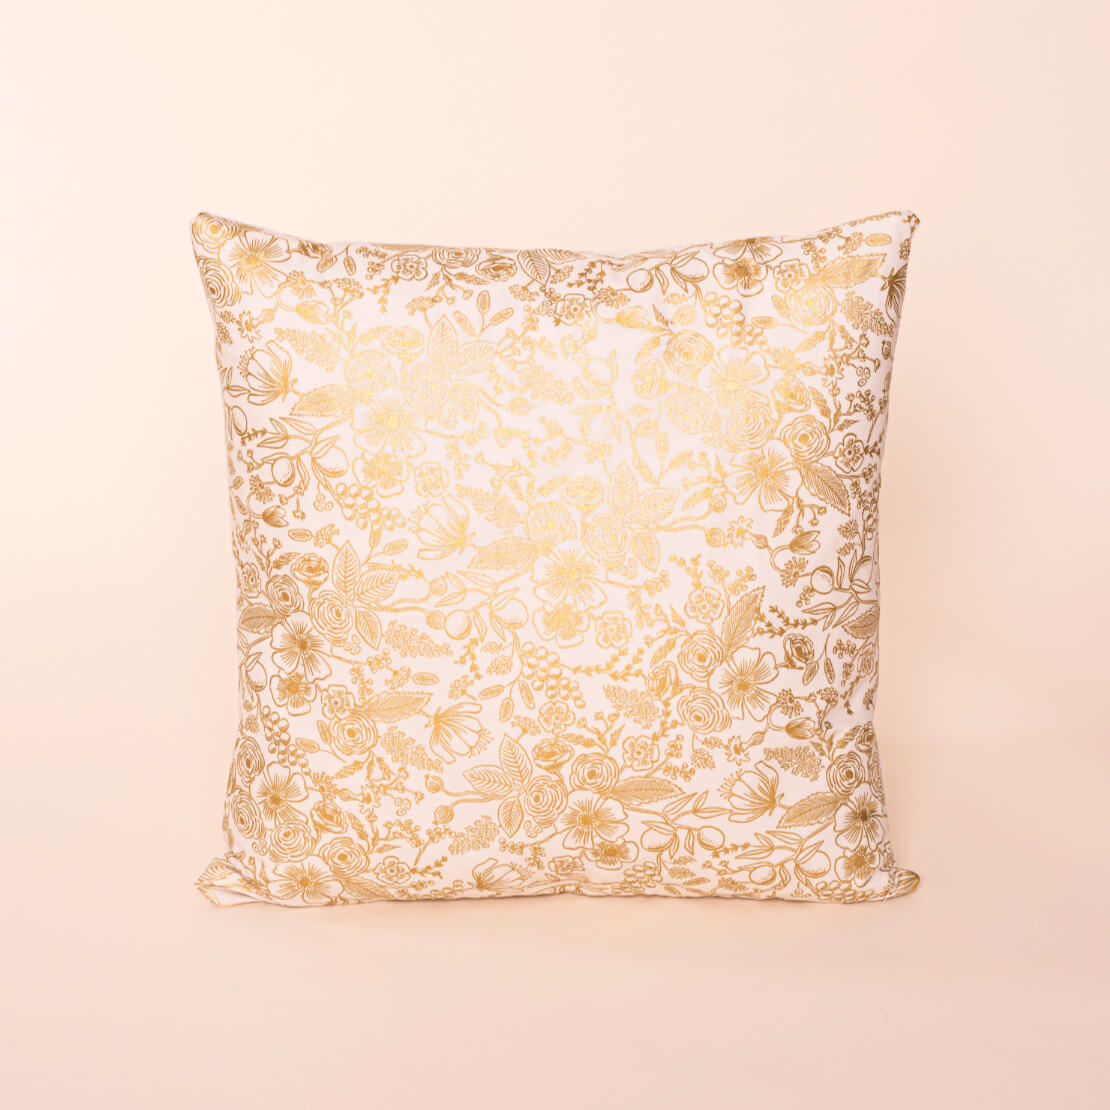 jolly Lundberg Cream & Gold Christmas Pillow Cover 20x20”